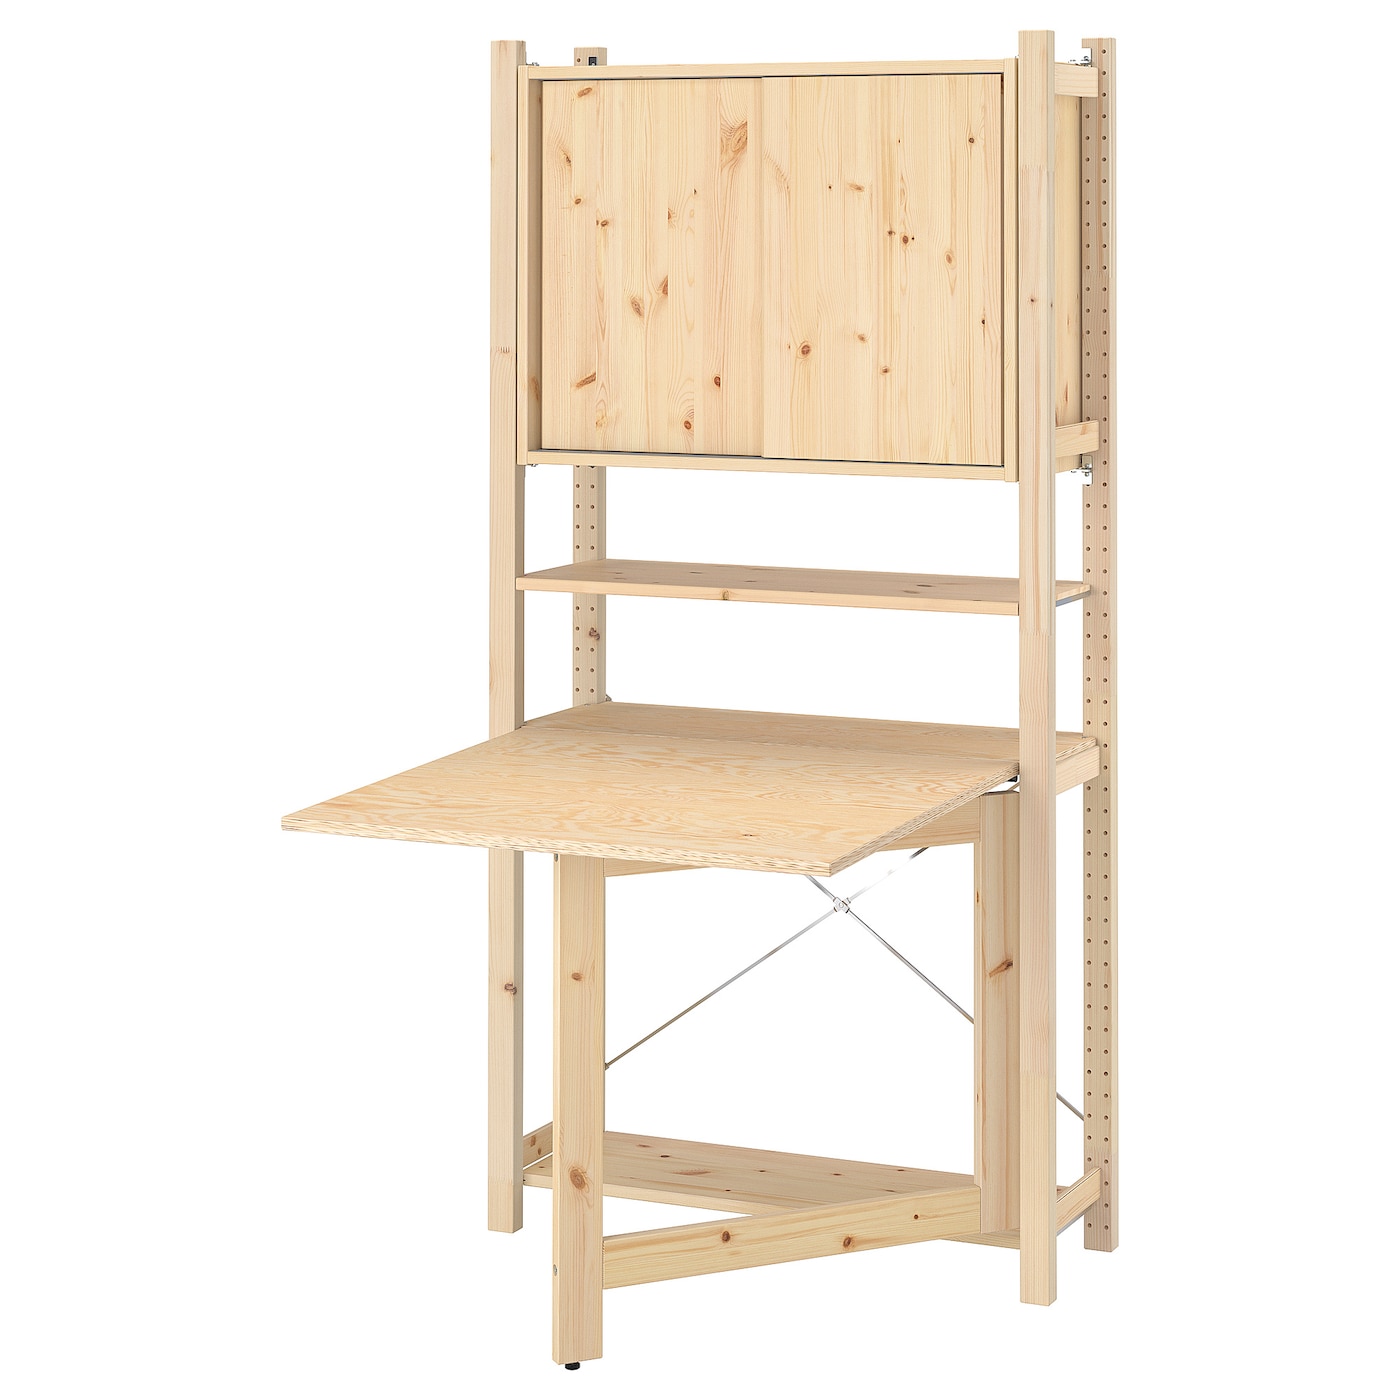 Шкаф со складным столом - IKEA IVAR, 89х30х179 см, сосна, ИВАР ИКЕА